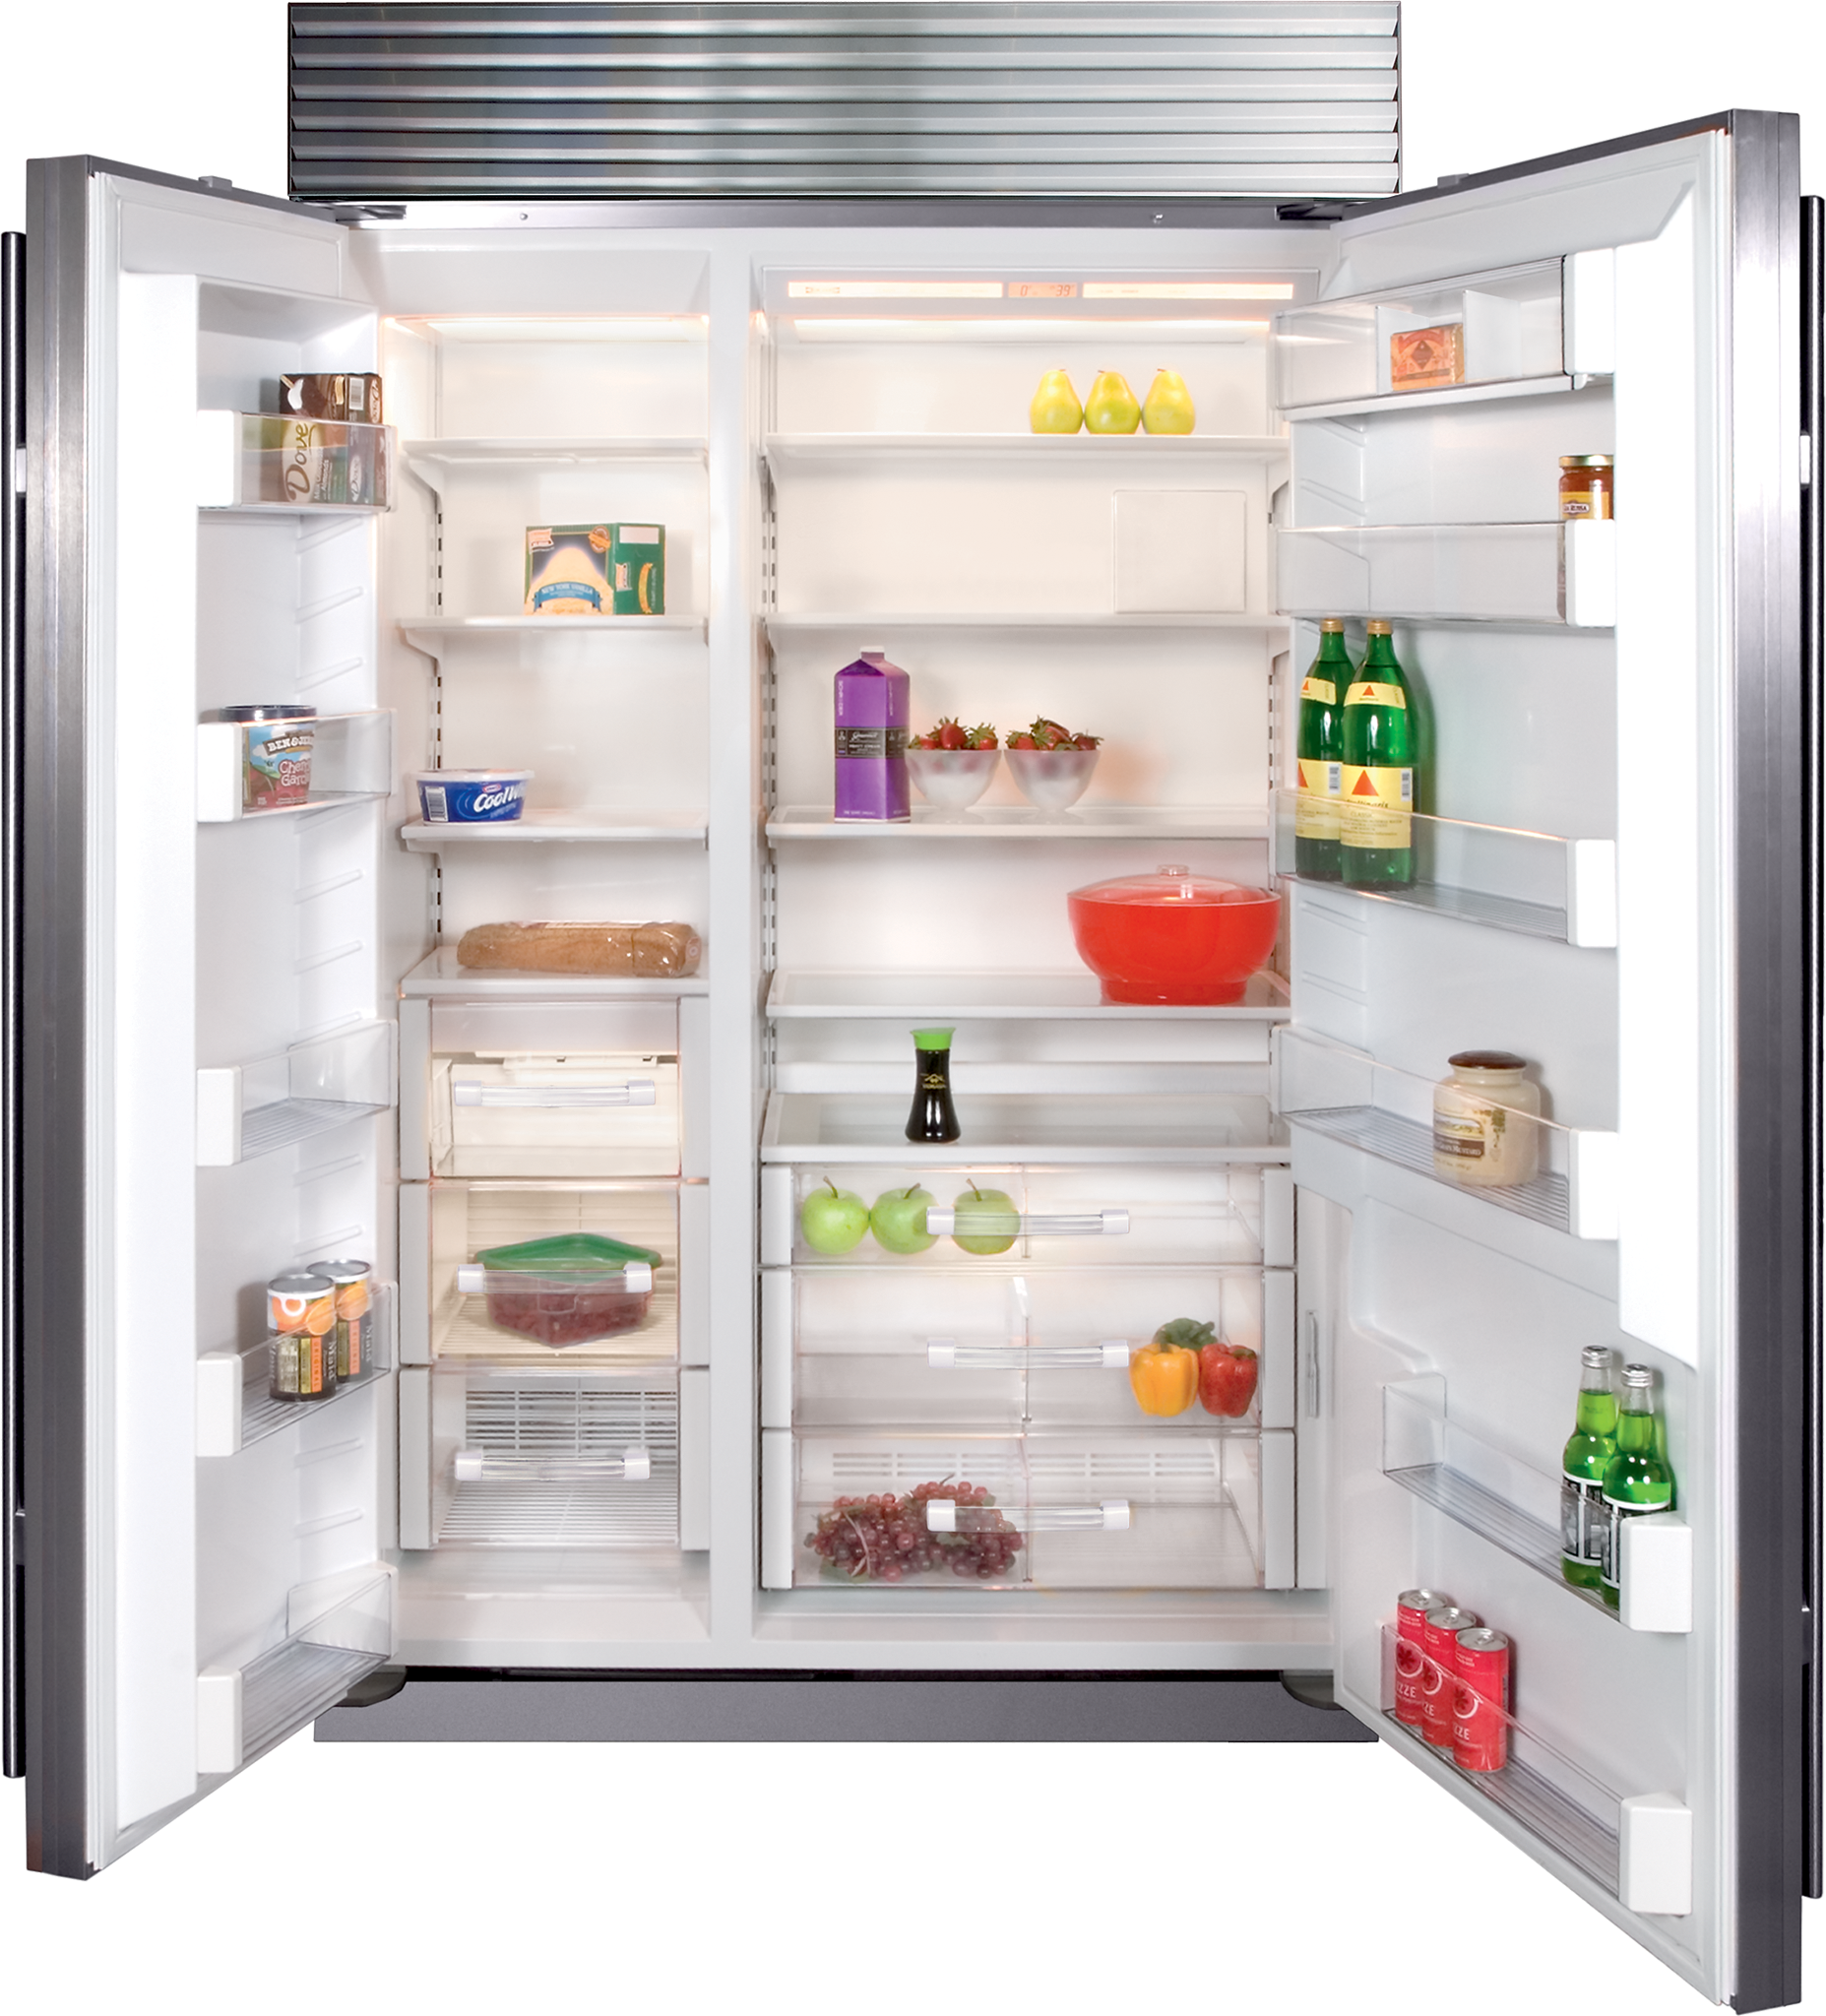 48" SUBZERO Built-In Side-by-Side Refrigerator/Freezer - BI-48S/S/TH.